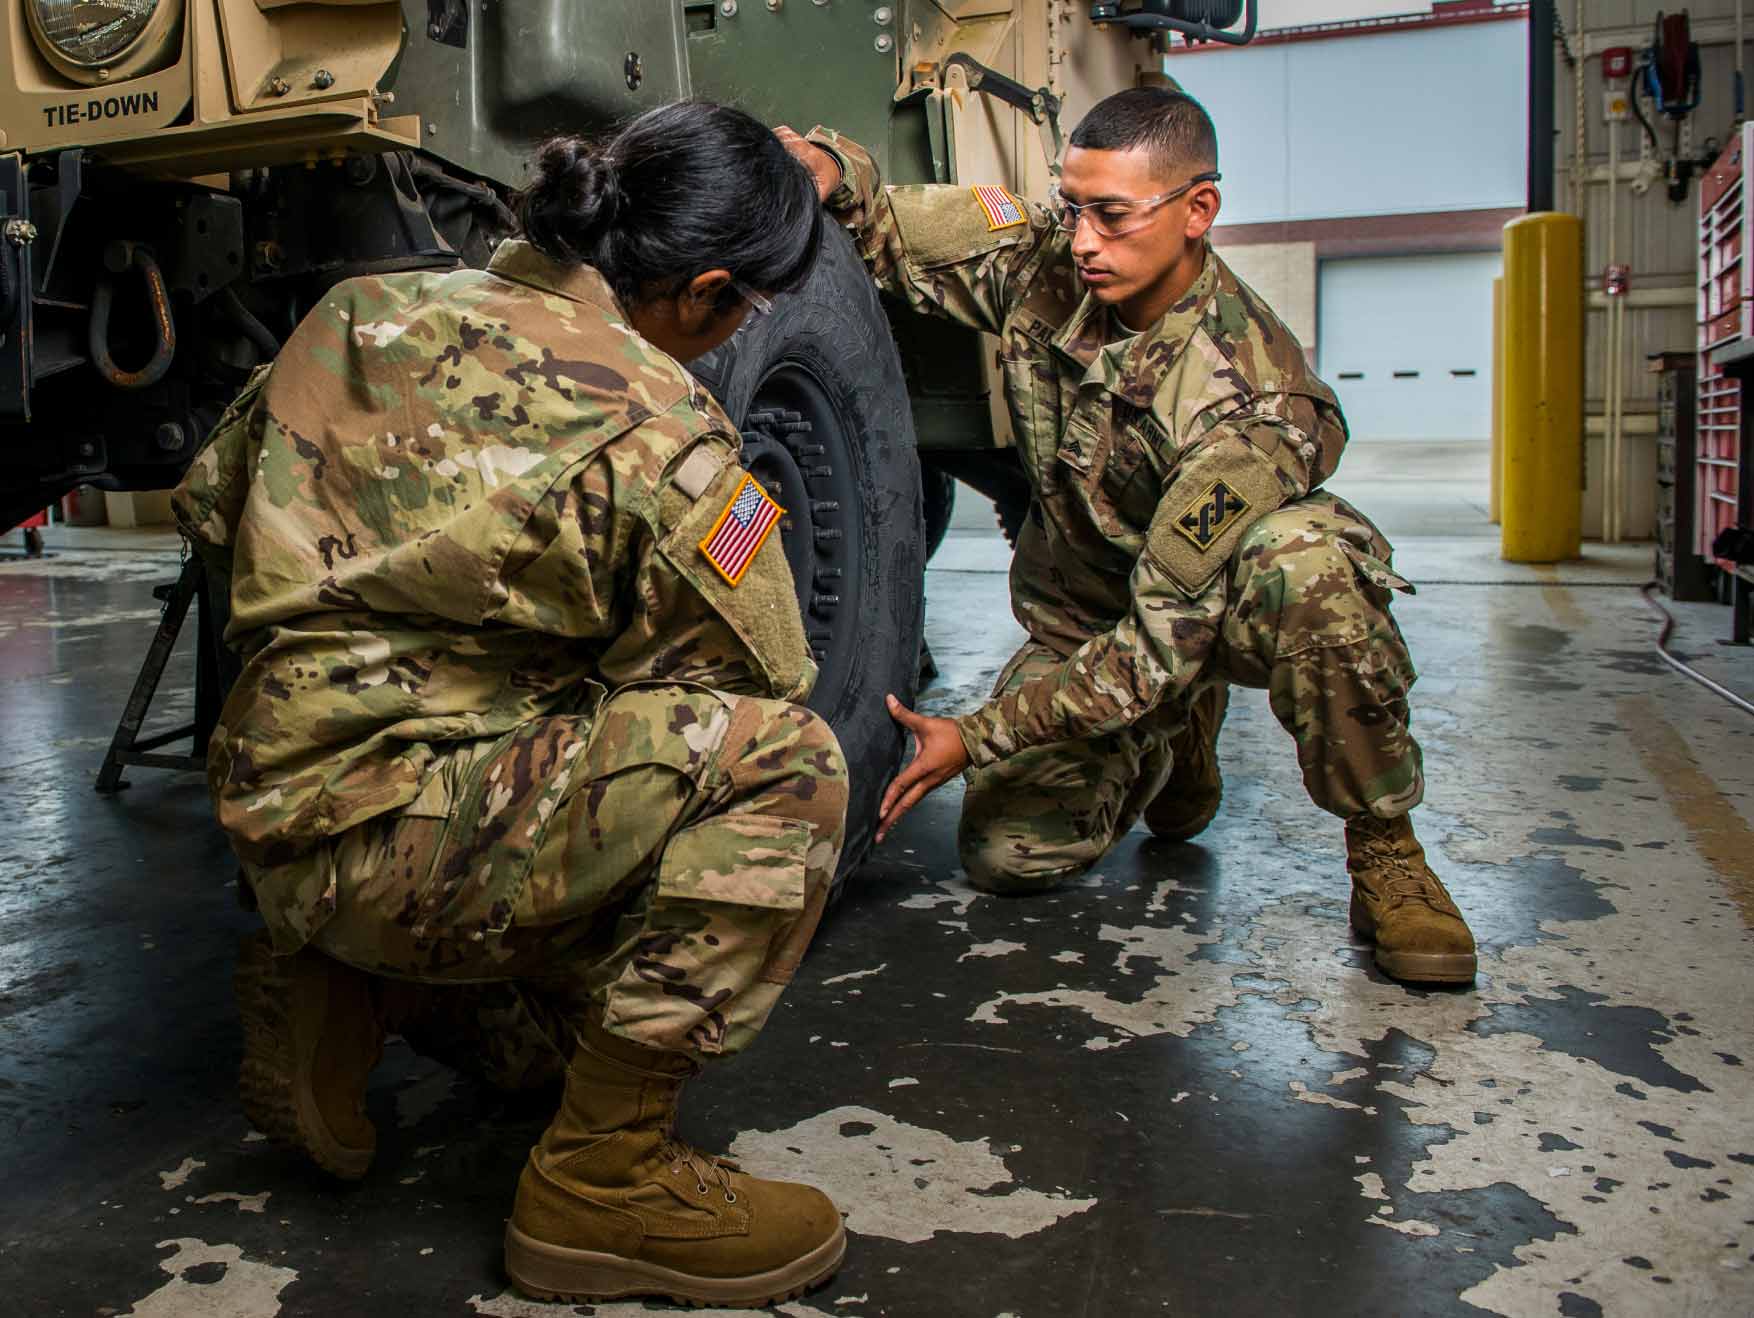 U.S. Army Reserve wheeled vehicle mechanics putting tires on a Military vehicle